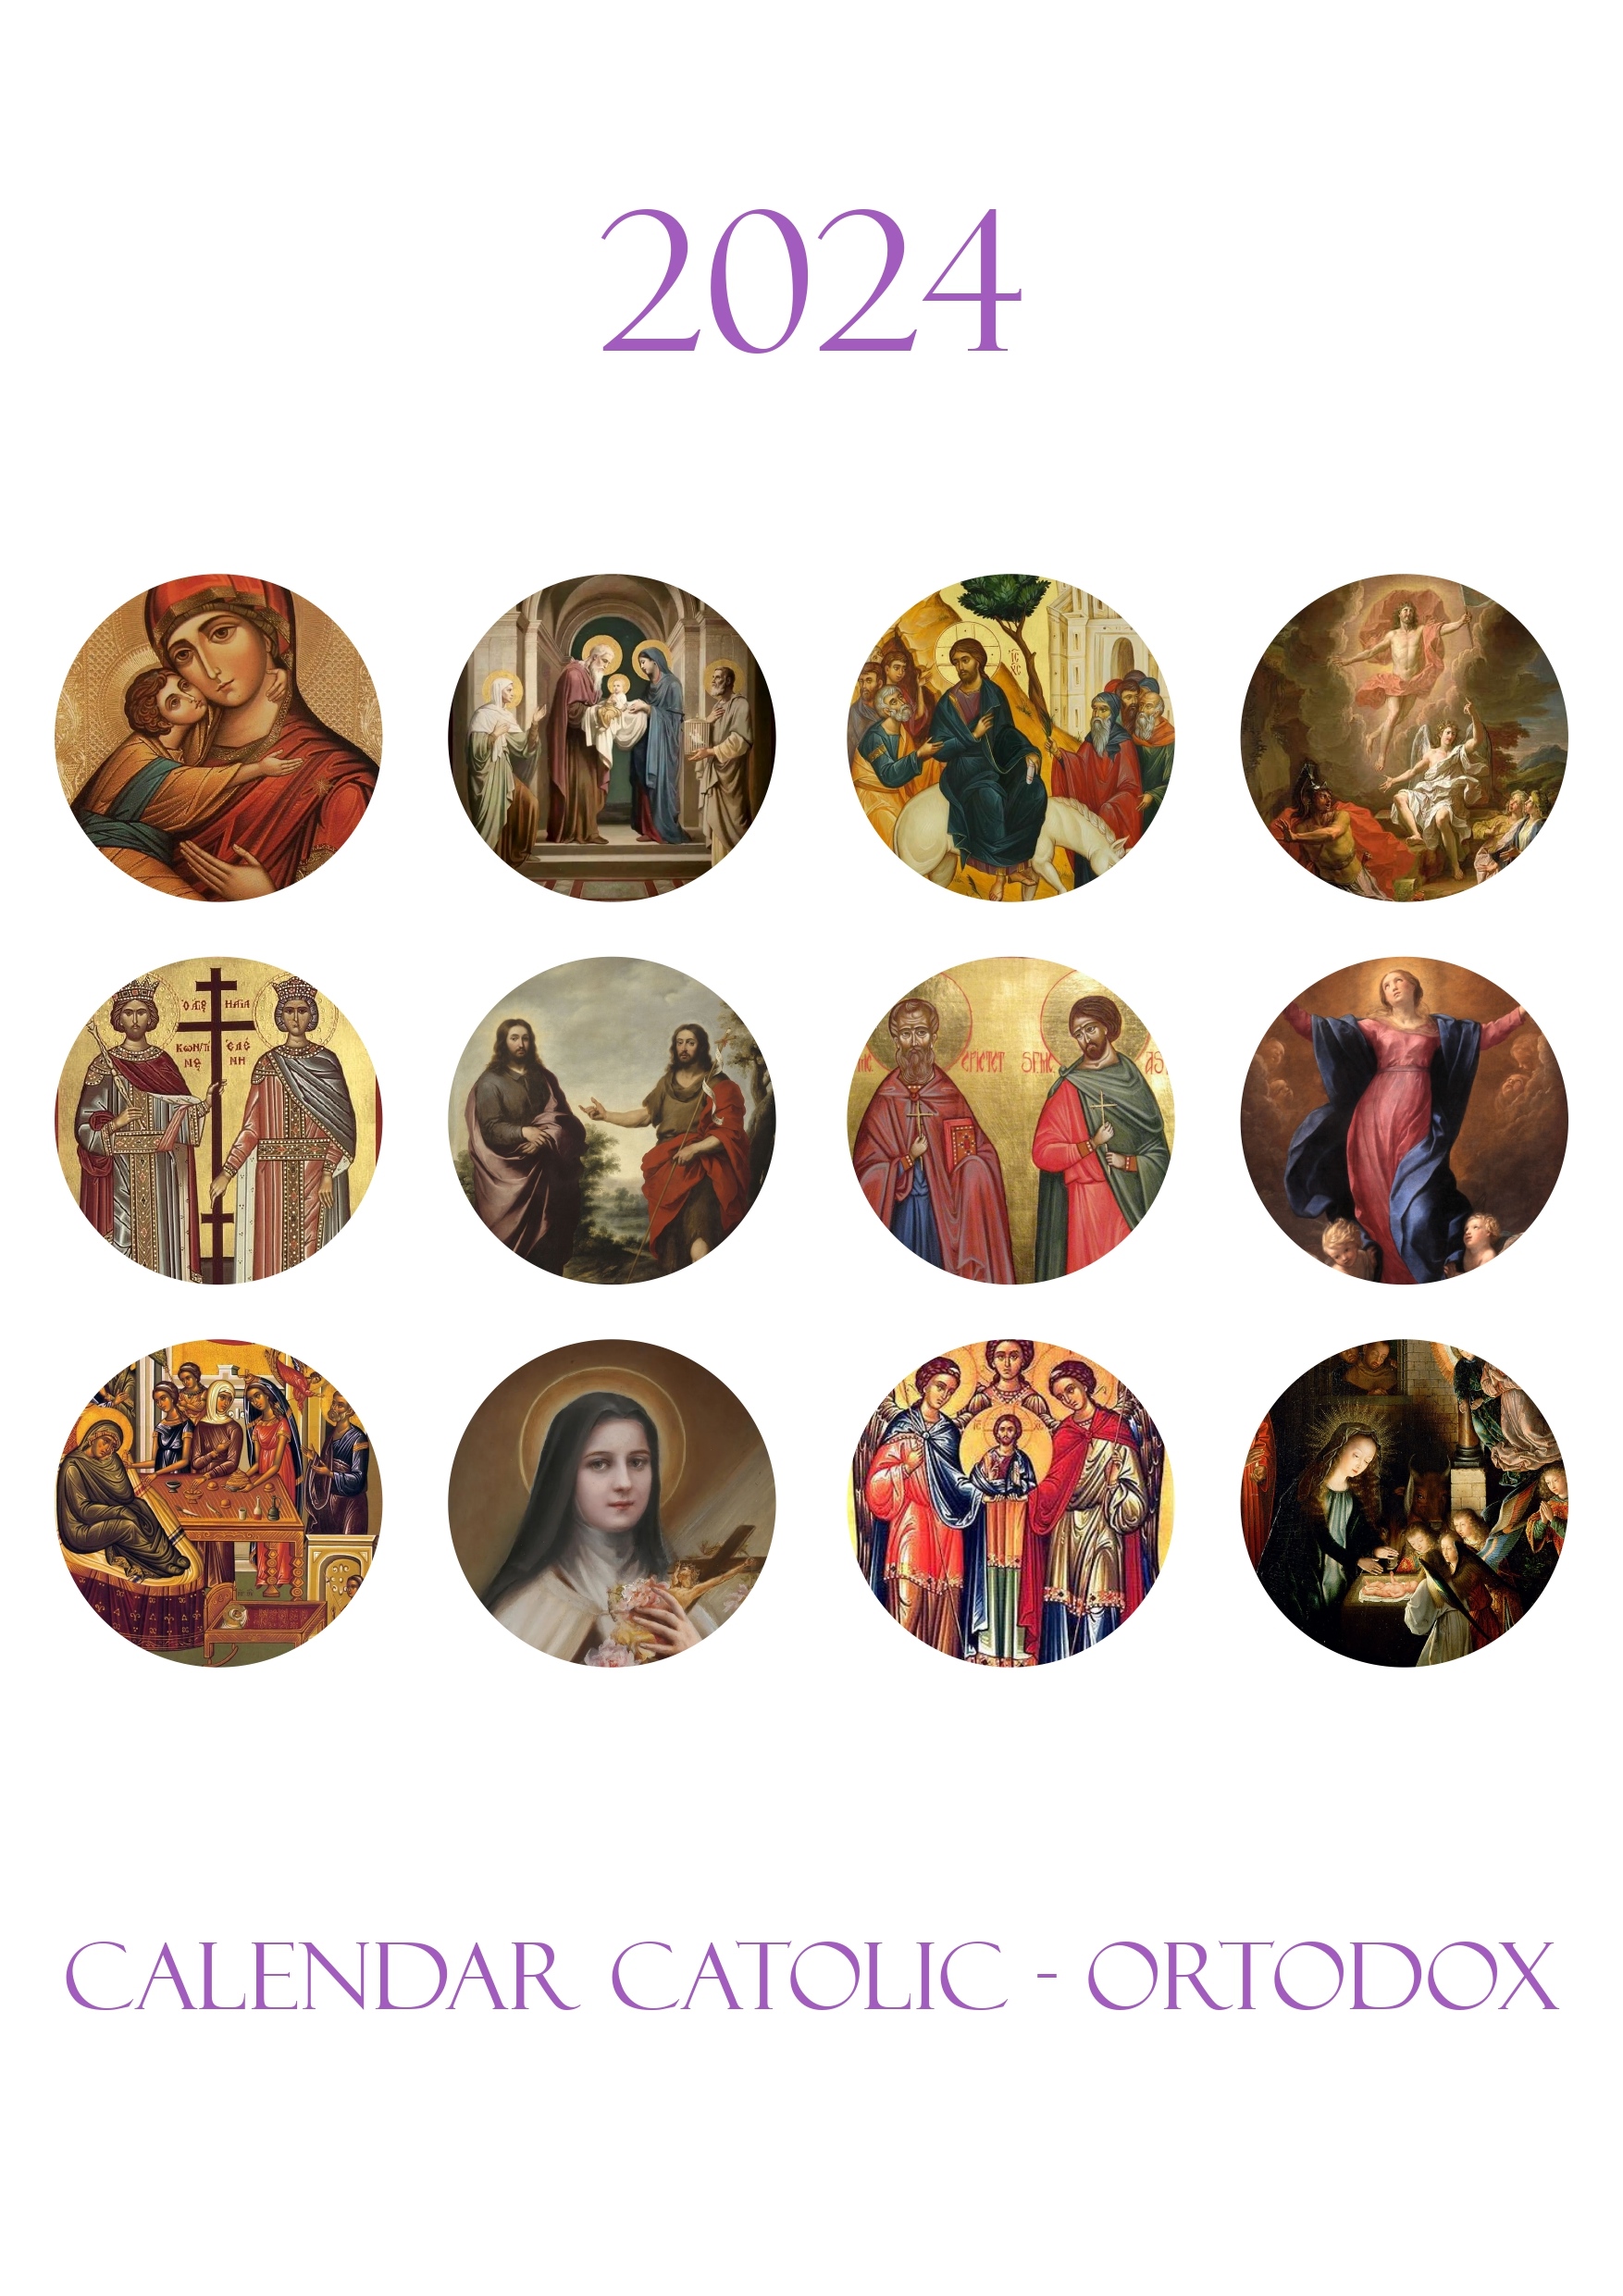 Calendar catolic-ortodox 2024